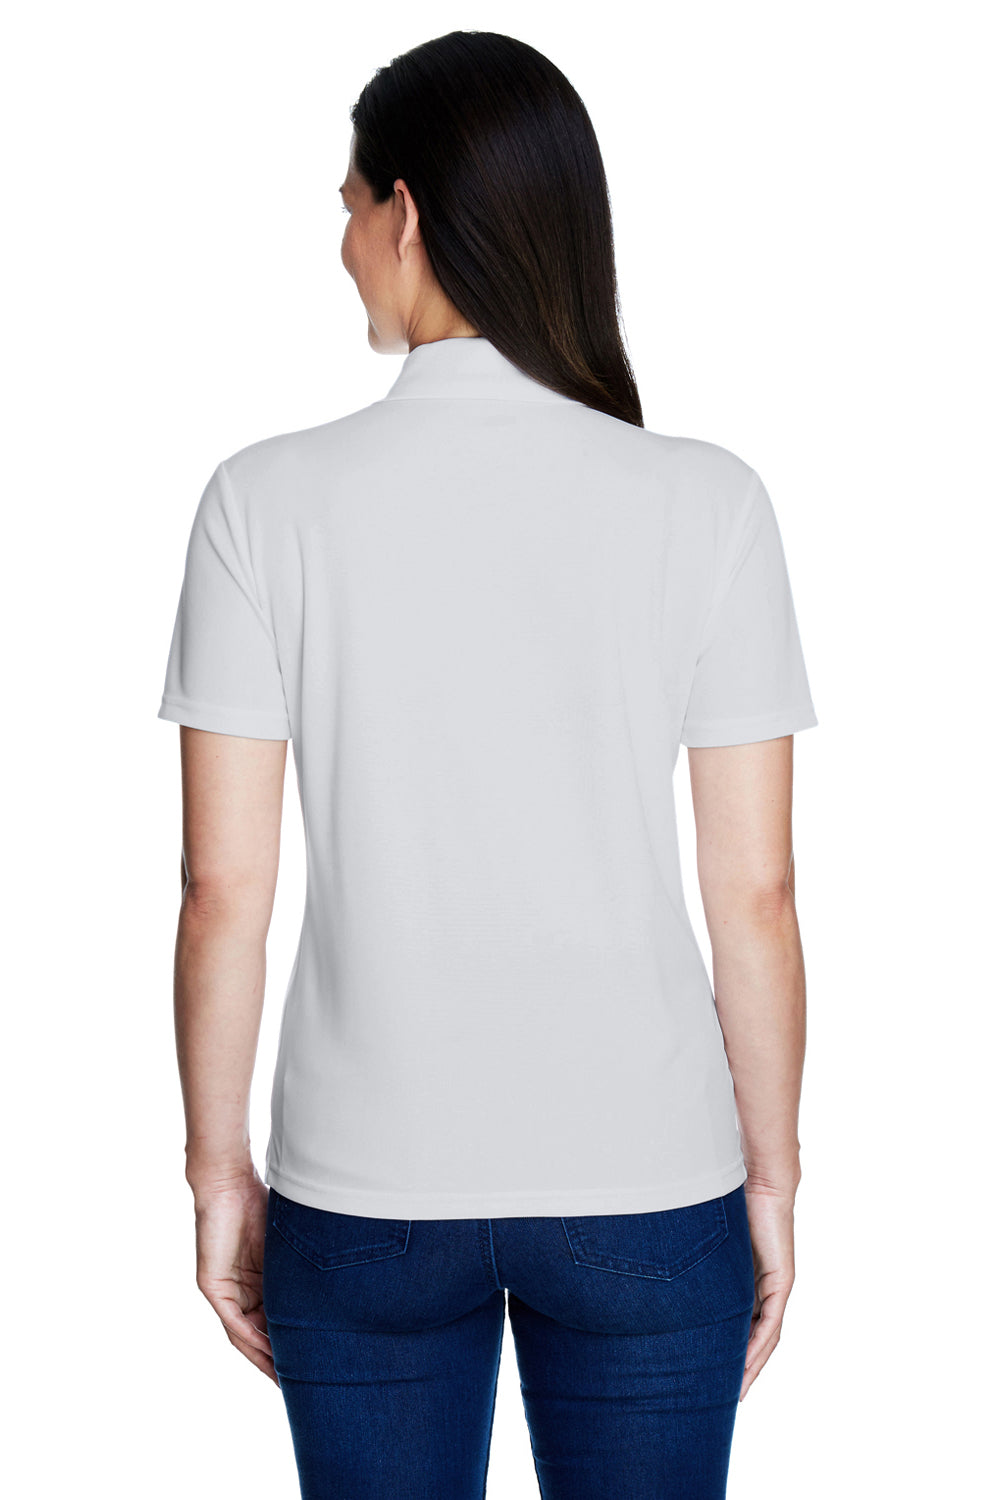 Core 365 78181 Womens Origin Performance Moisture Wicking Short Sleeve Polo Shirt Platinum Grey Back